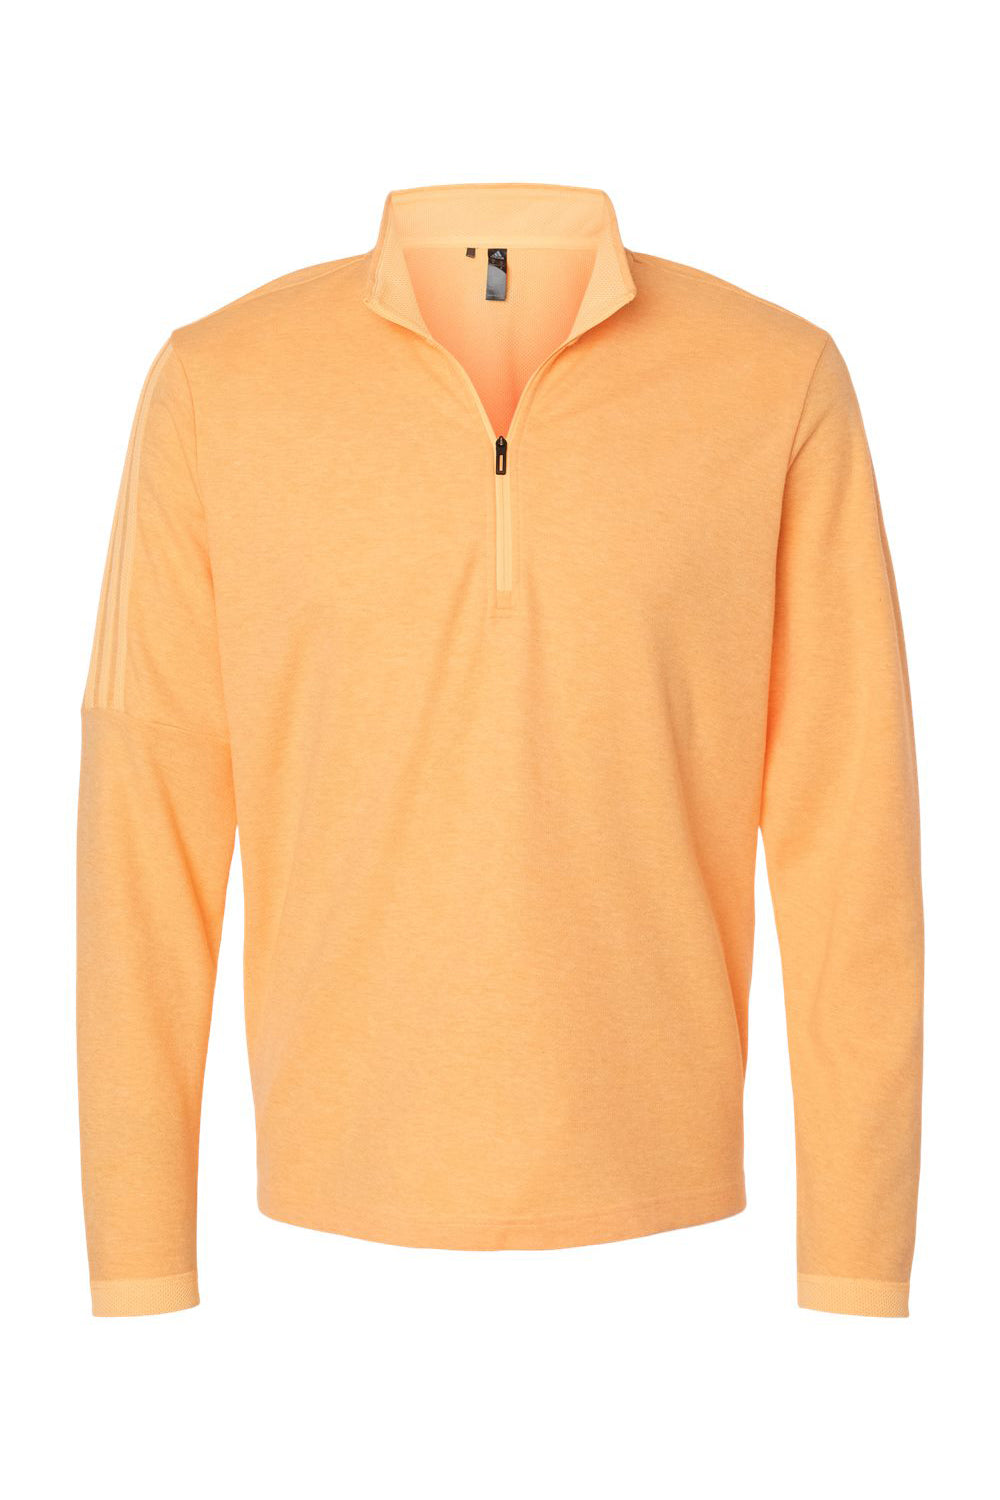 Adidas A554 Mens 3 Stripes Moisture Wicking 1/4 Zip Sweater Acid Orange Melange Flat Front